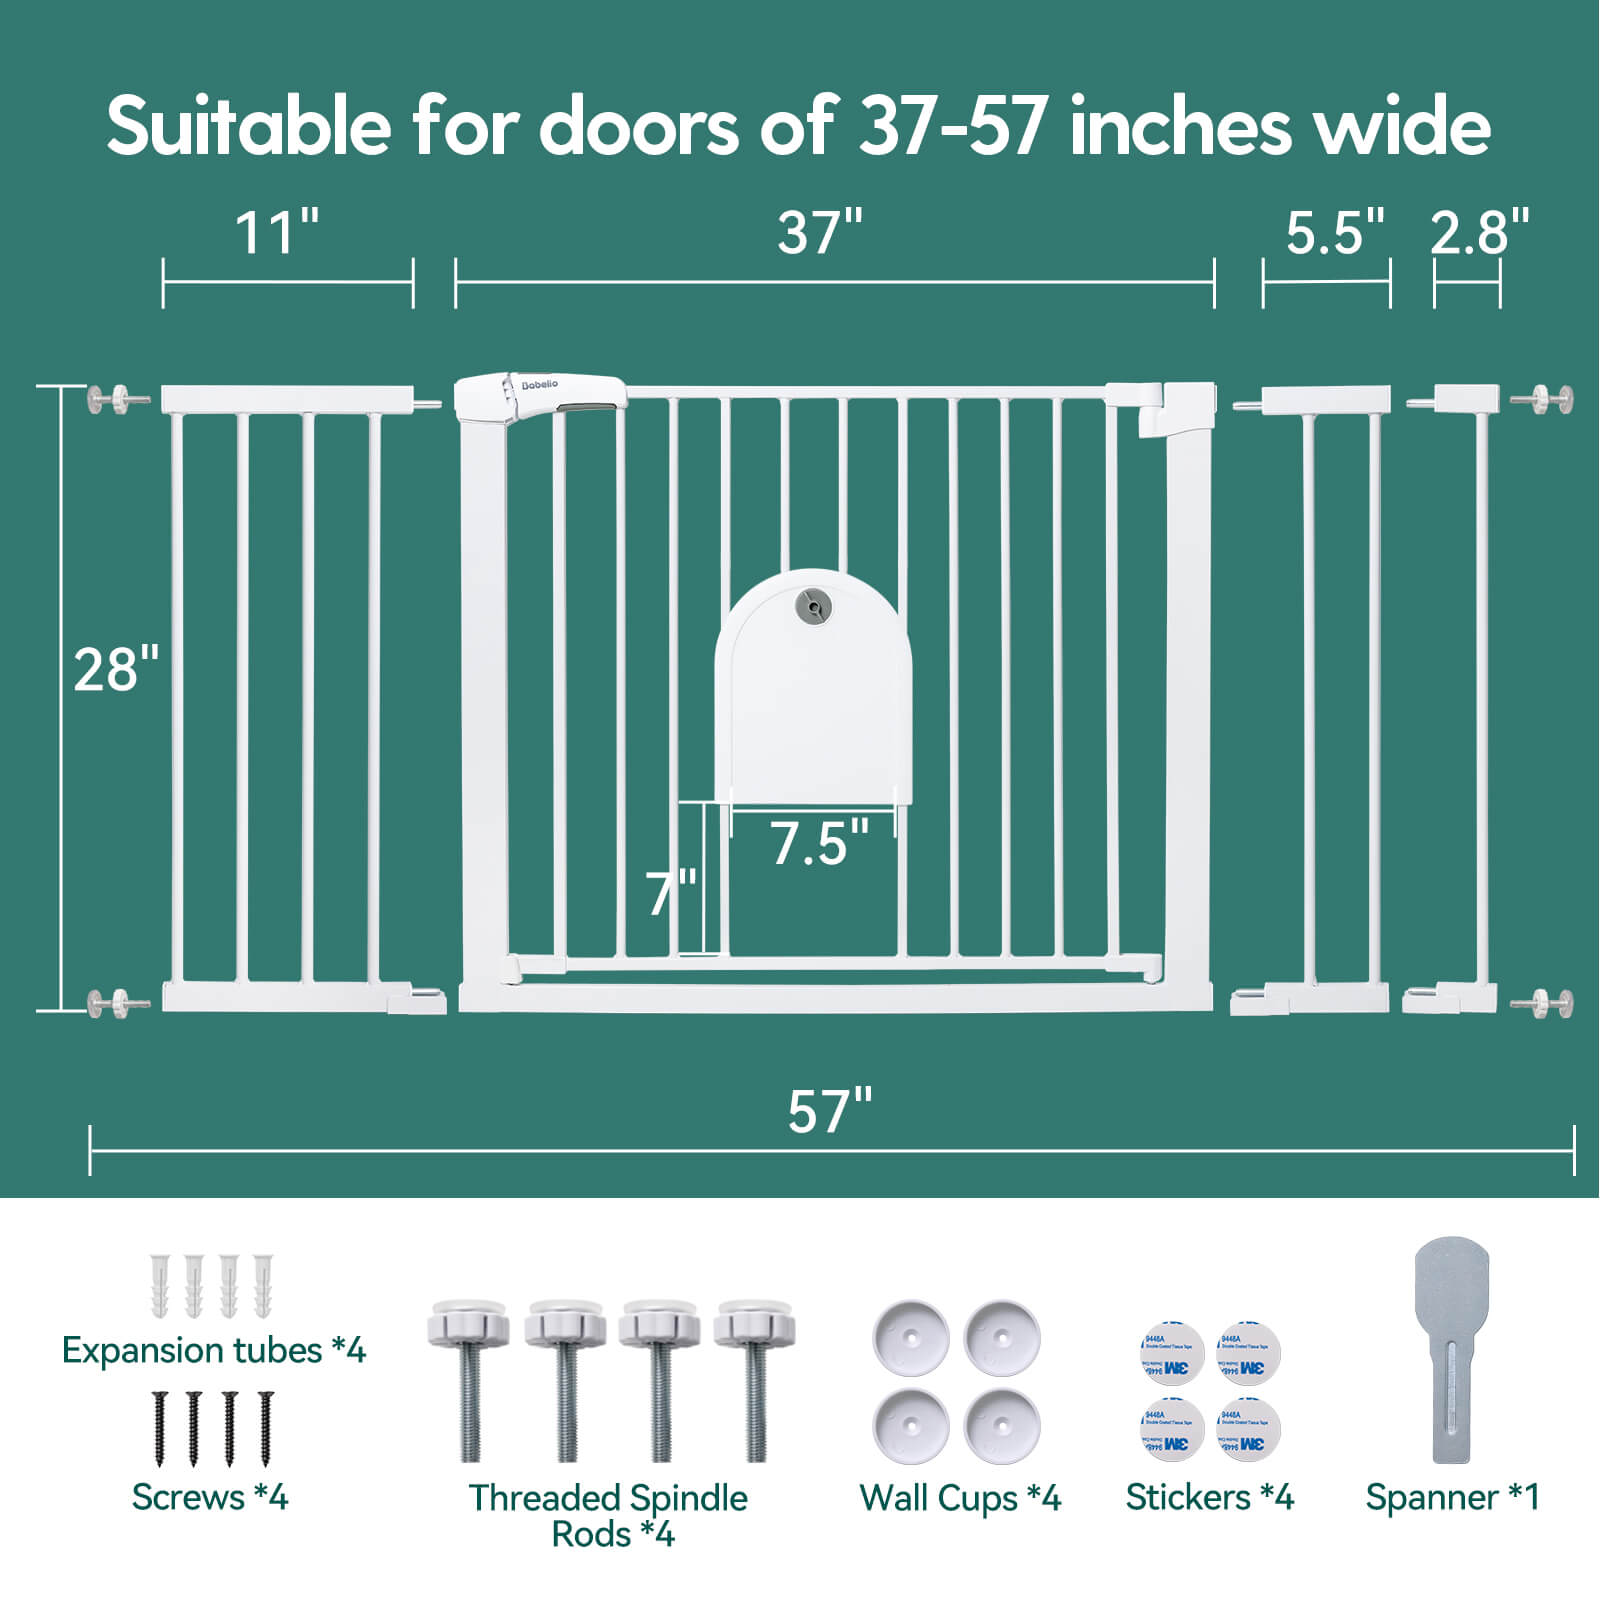 Babelio Flex-Fit 29-43" Adjustable Baby Gate with Lockable Pet Door – Auto-Close, Easy Walk-Thru